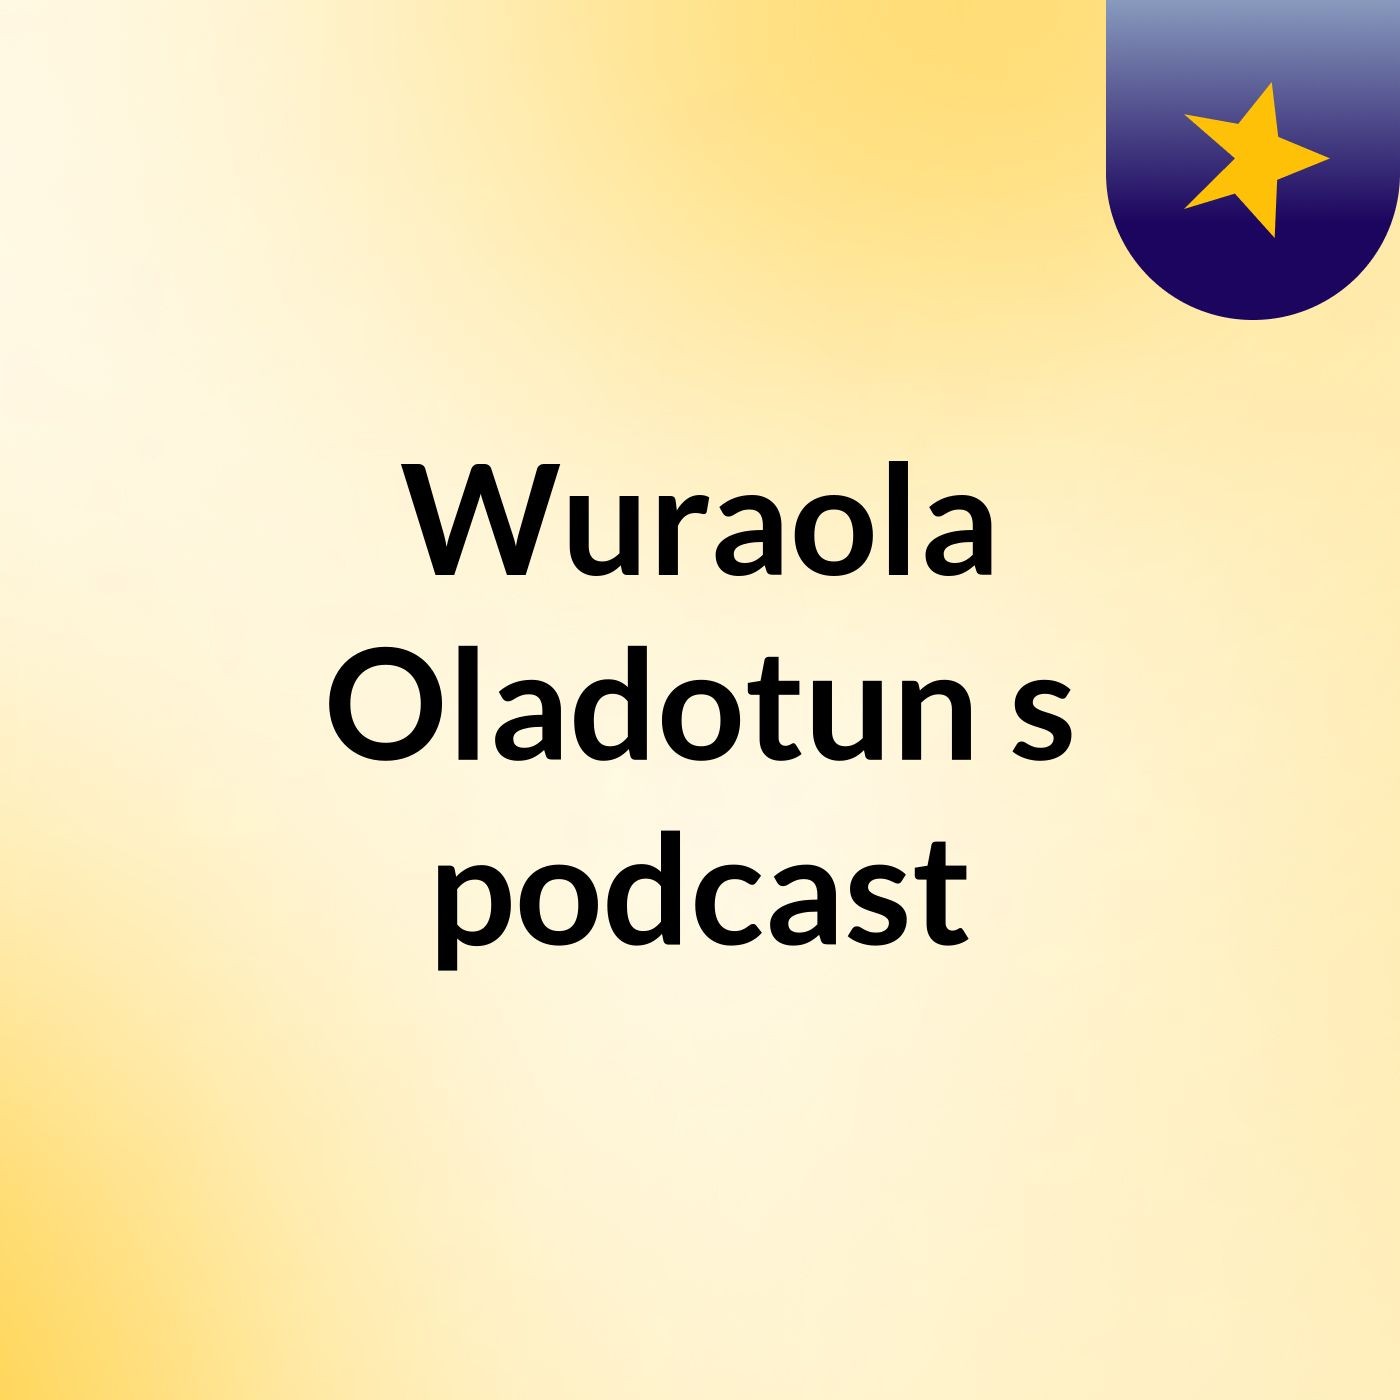 Episode 11 - Wuraola Oladotun's podcast